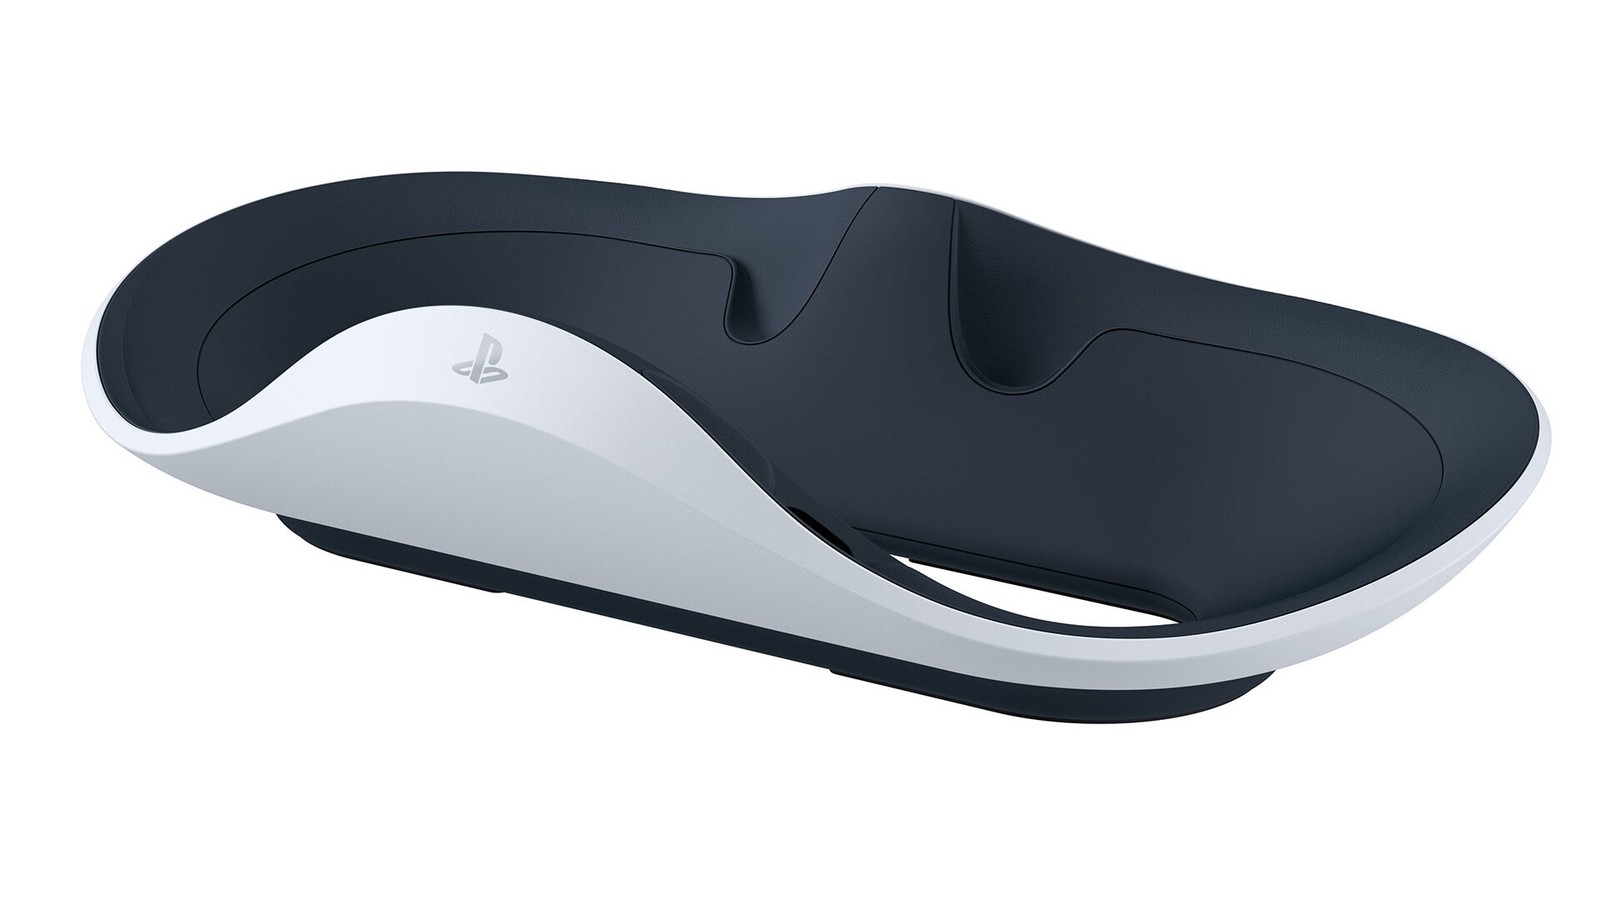 Ładowarka PlayStation VR2 Sense to mus dla każdego gracza PlayStation VR2!